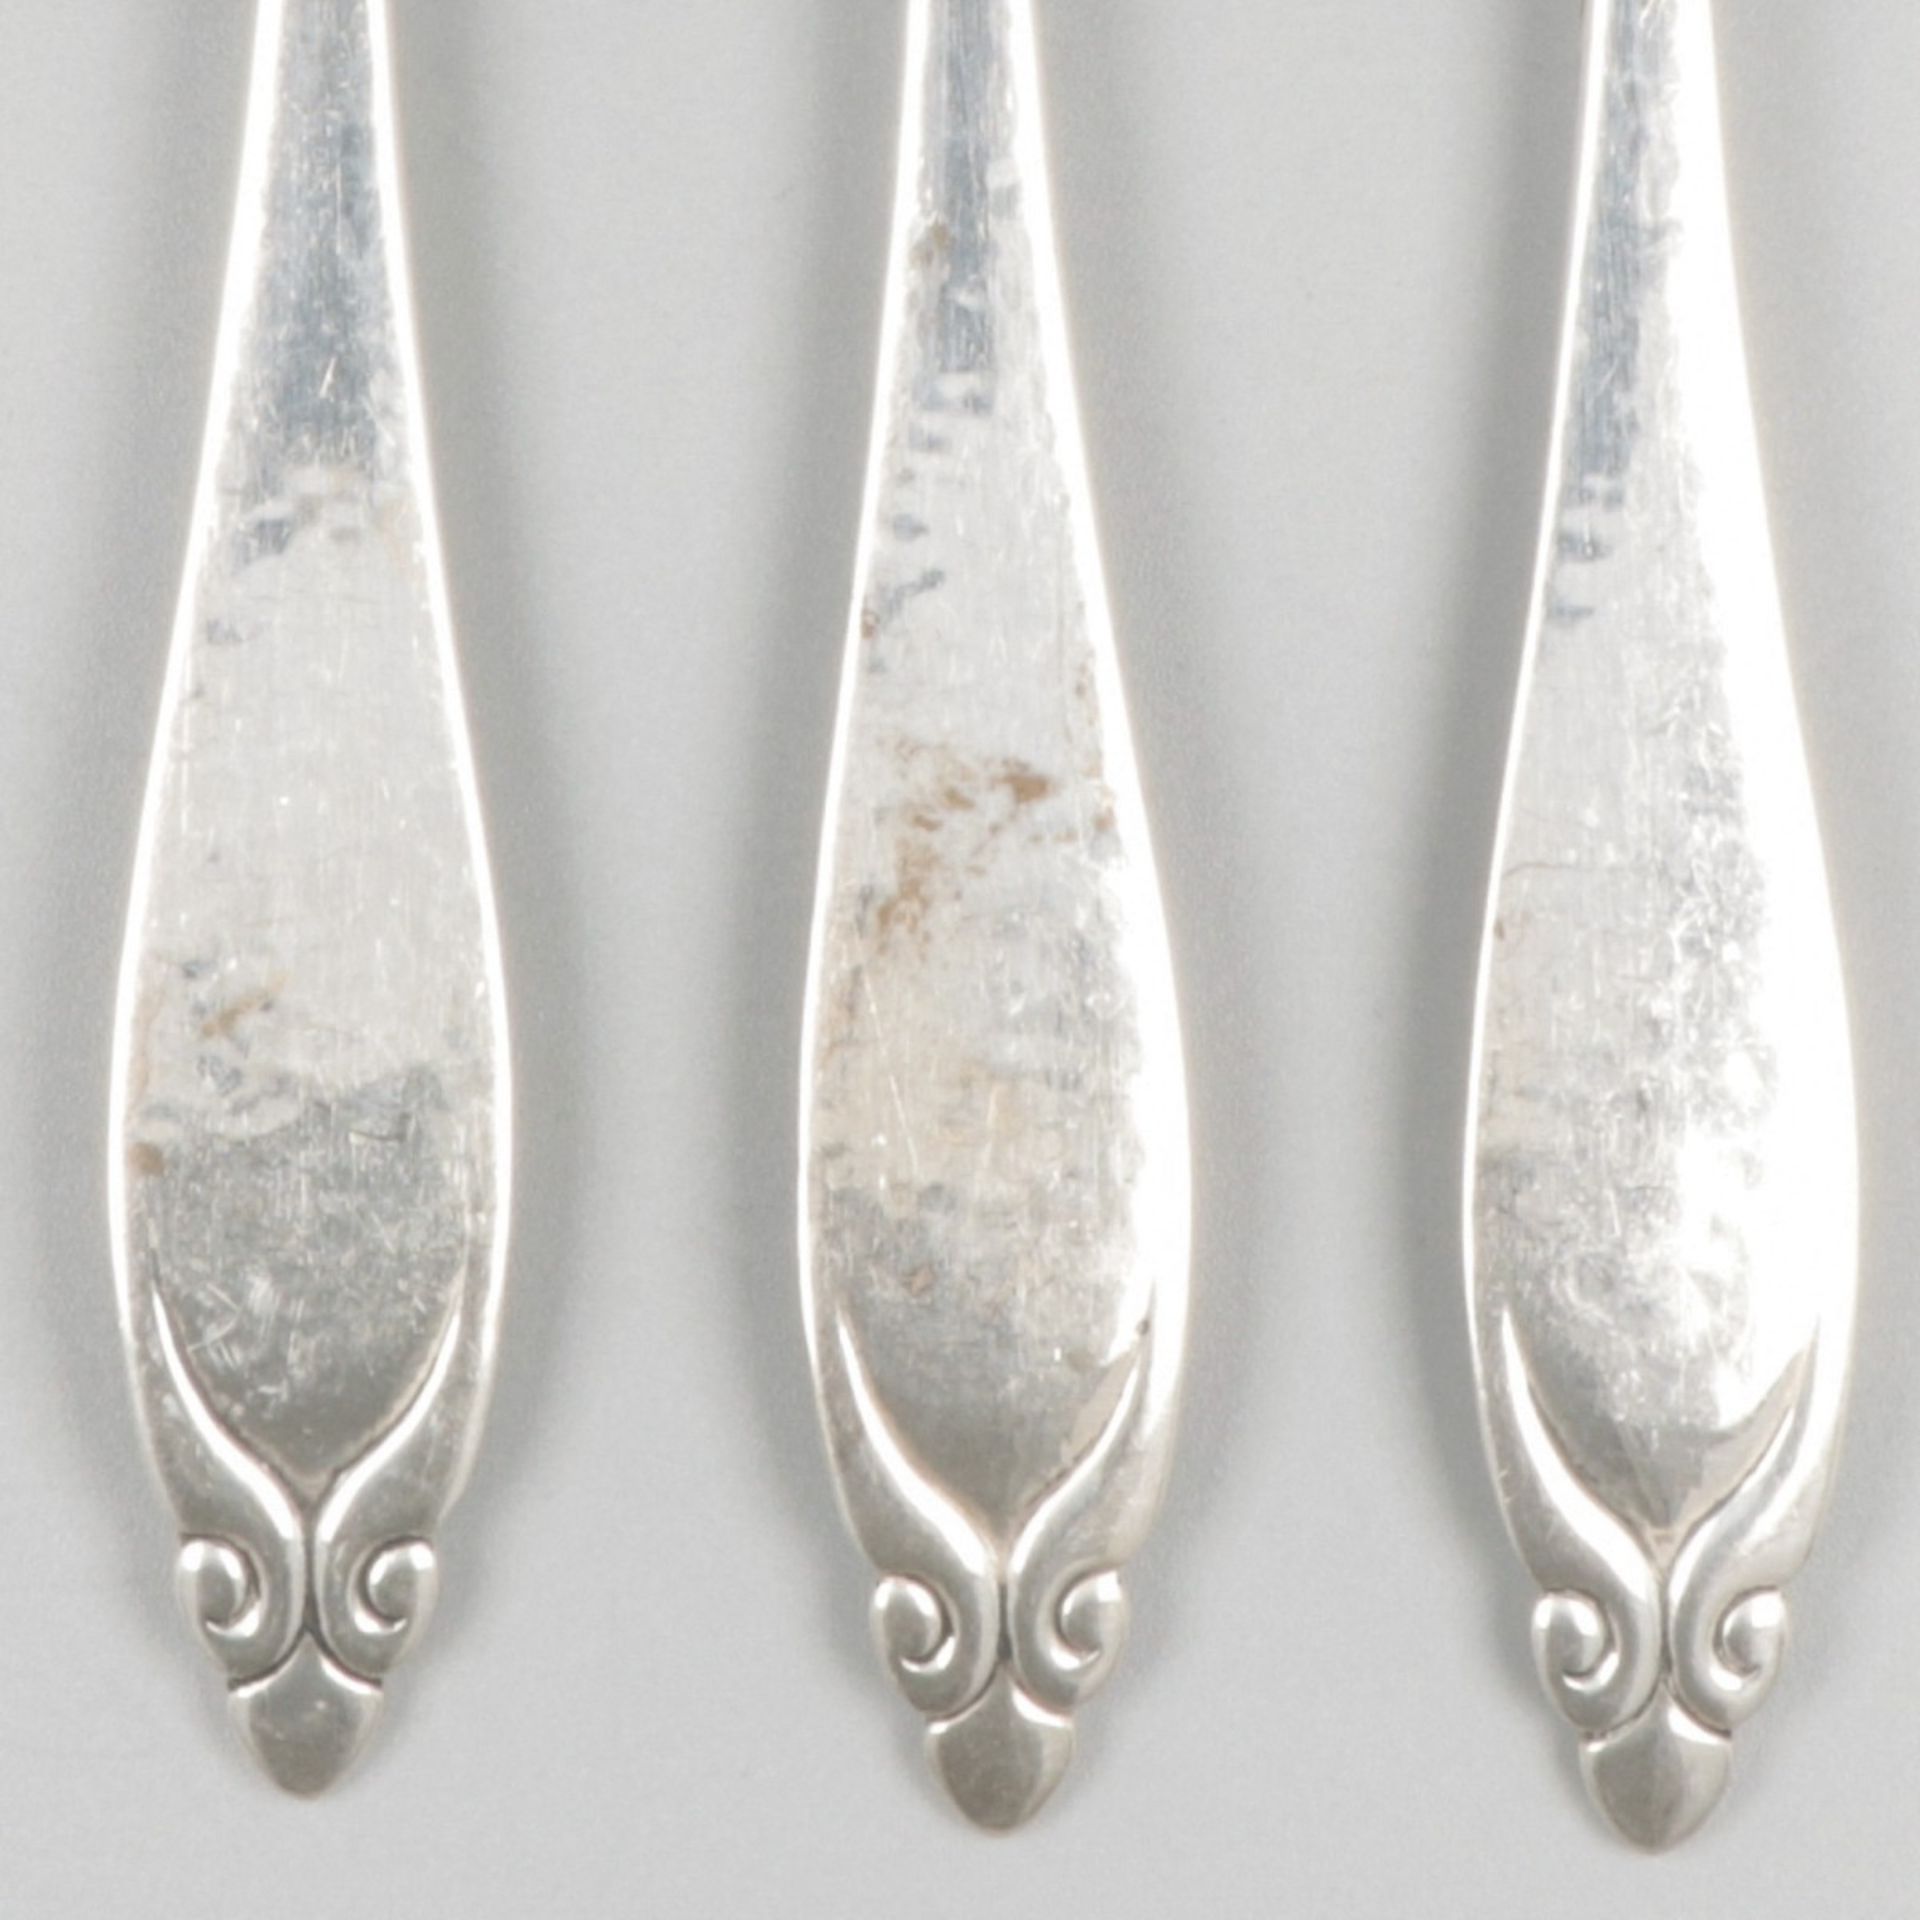 6-piece set dinner forks (Lillehammer (Oppland), M. Østby) silver. - Image 5 of 5